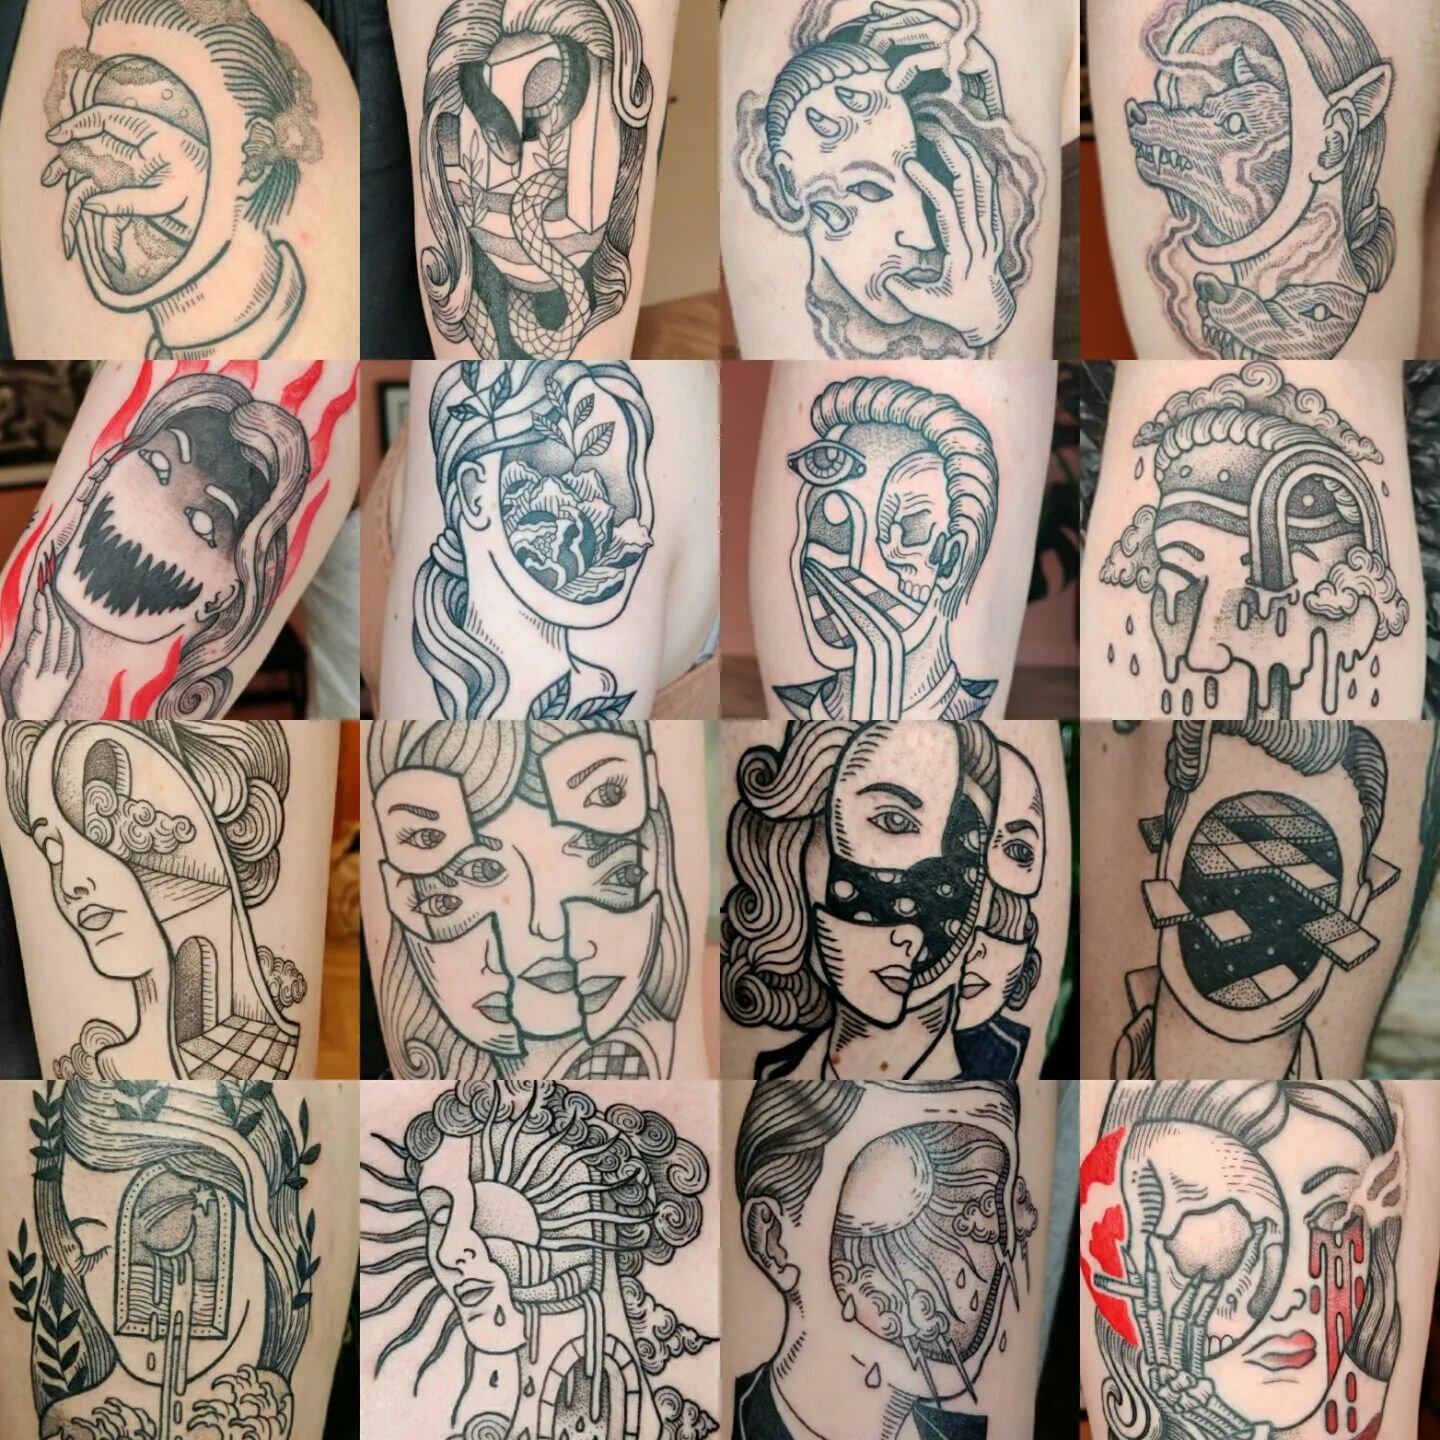 Get weird.
Some of my favourites.
.
..
#tattooed #tattoo #tattooer #tattooist #tattooing #tattoos #tatt  #blackwork #blackworktattoo #blackworkers #linework #ink #inked #darkwork #darkart #darkartist #oslo #oslotattoo #osloartist #oslotattooartist  #